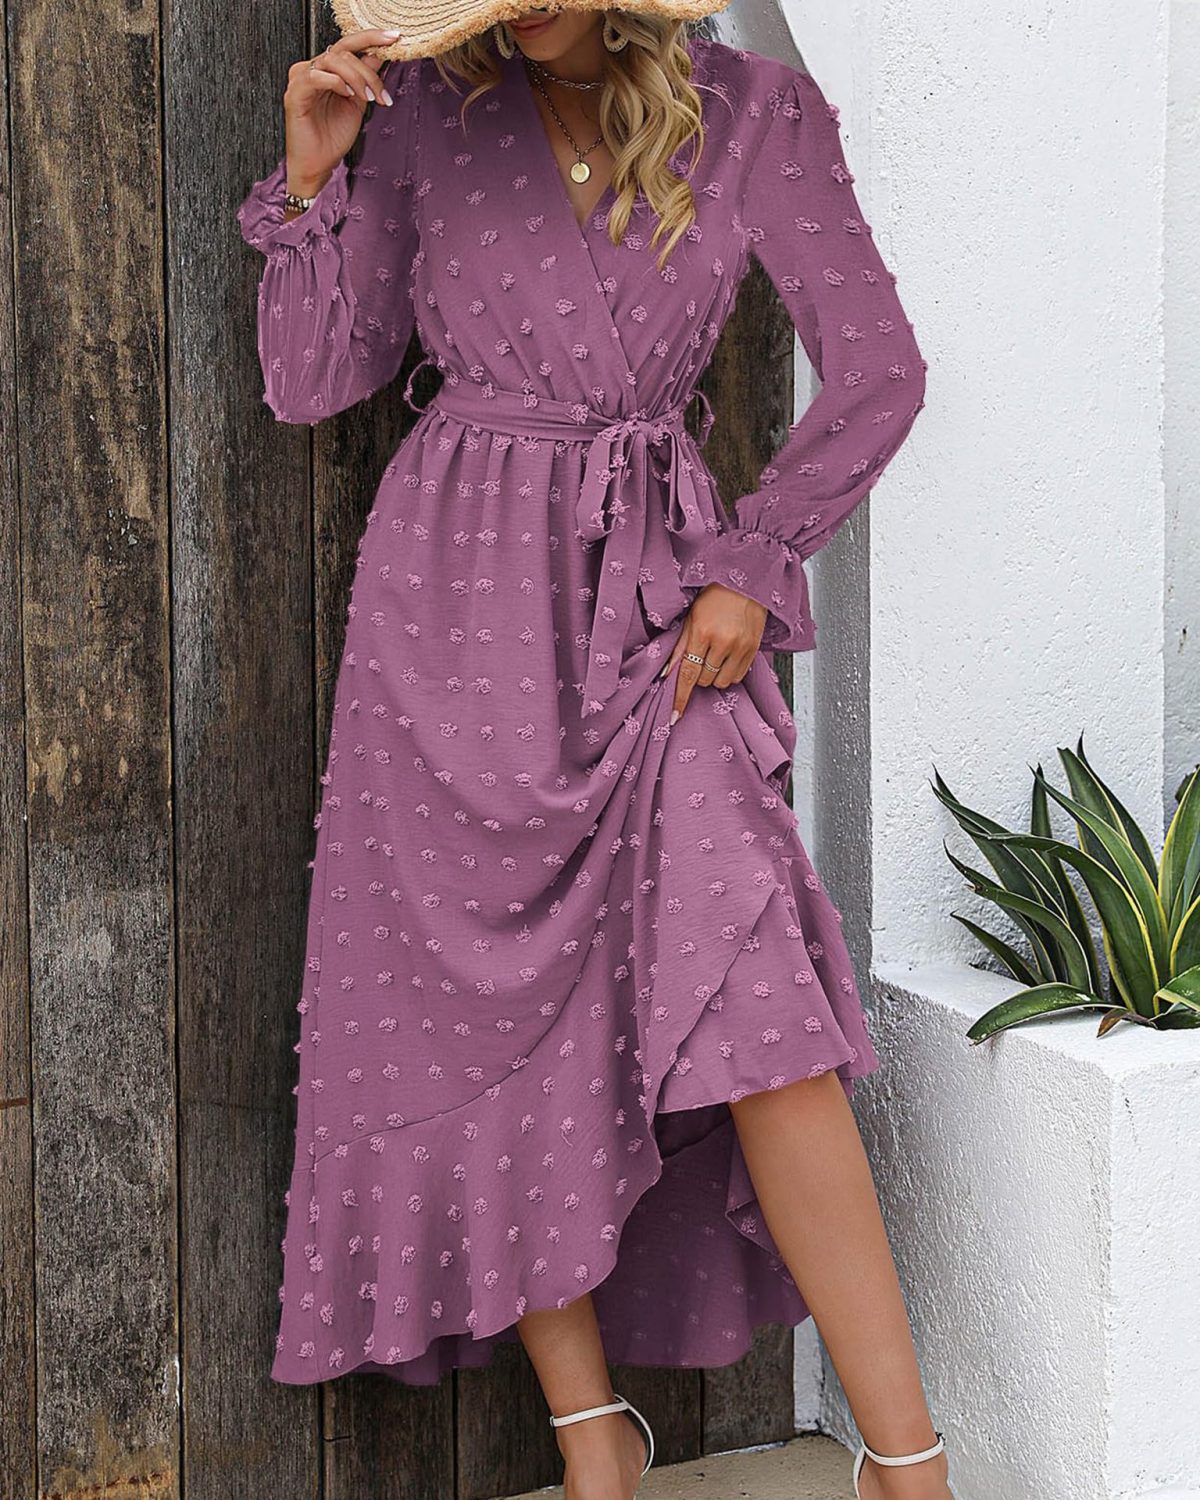 Swiss Polka Dot Long Sleeve Streamlined Party Dress in Dresses